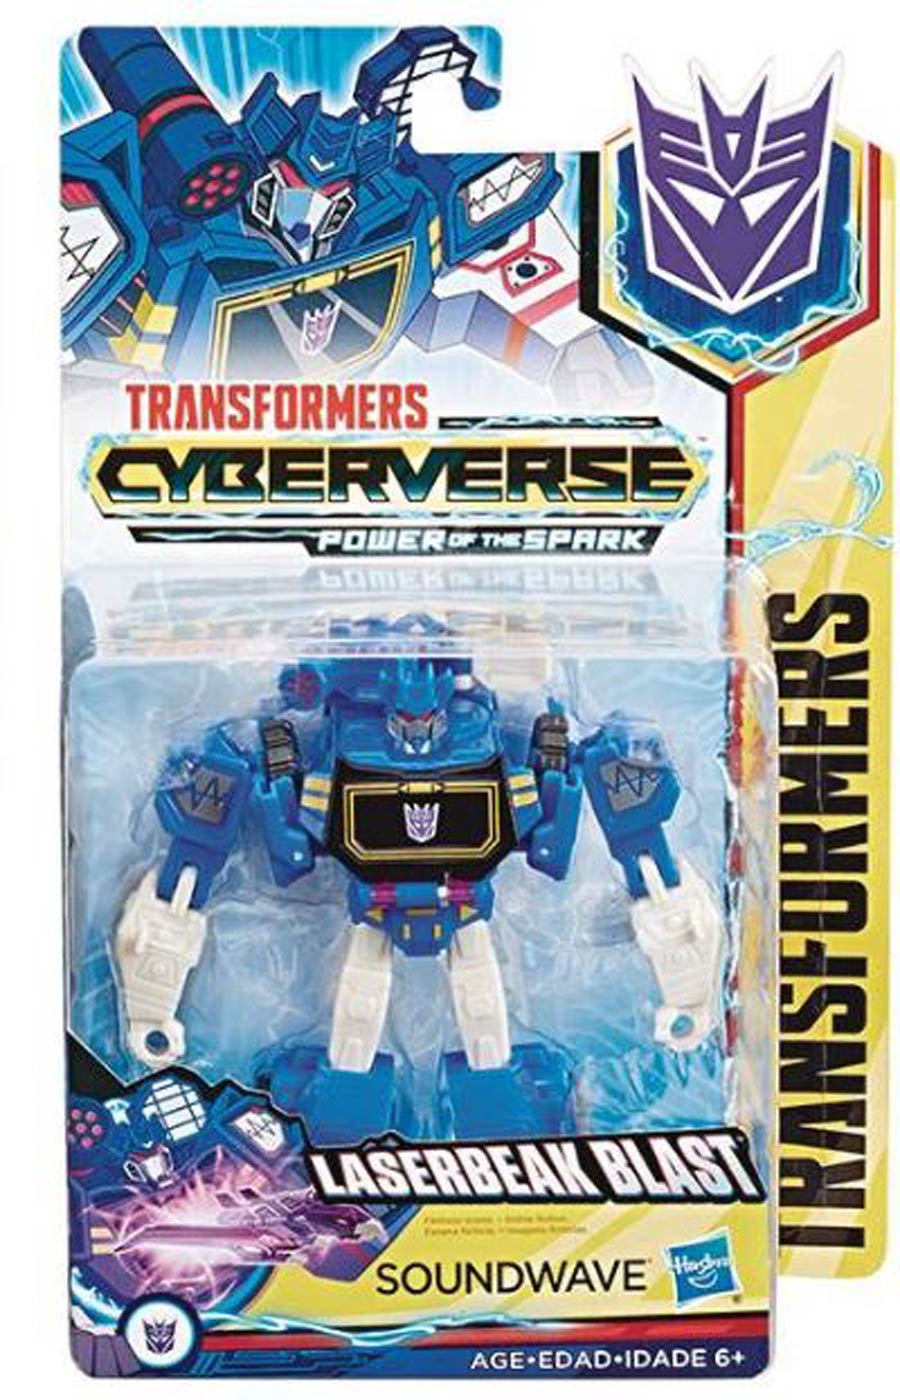 Transformers Cyberverse Warrior Action Figure Assortment 201902 - Soundwave